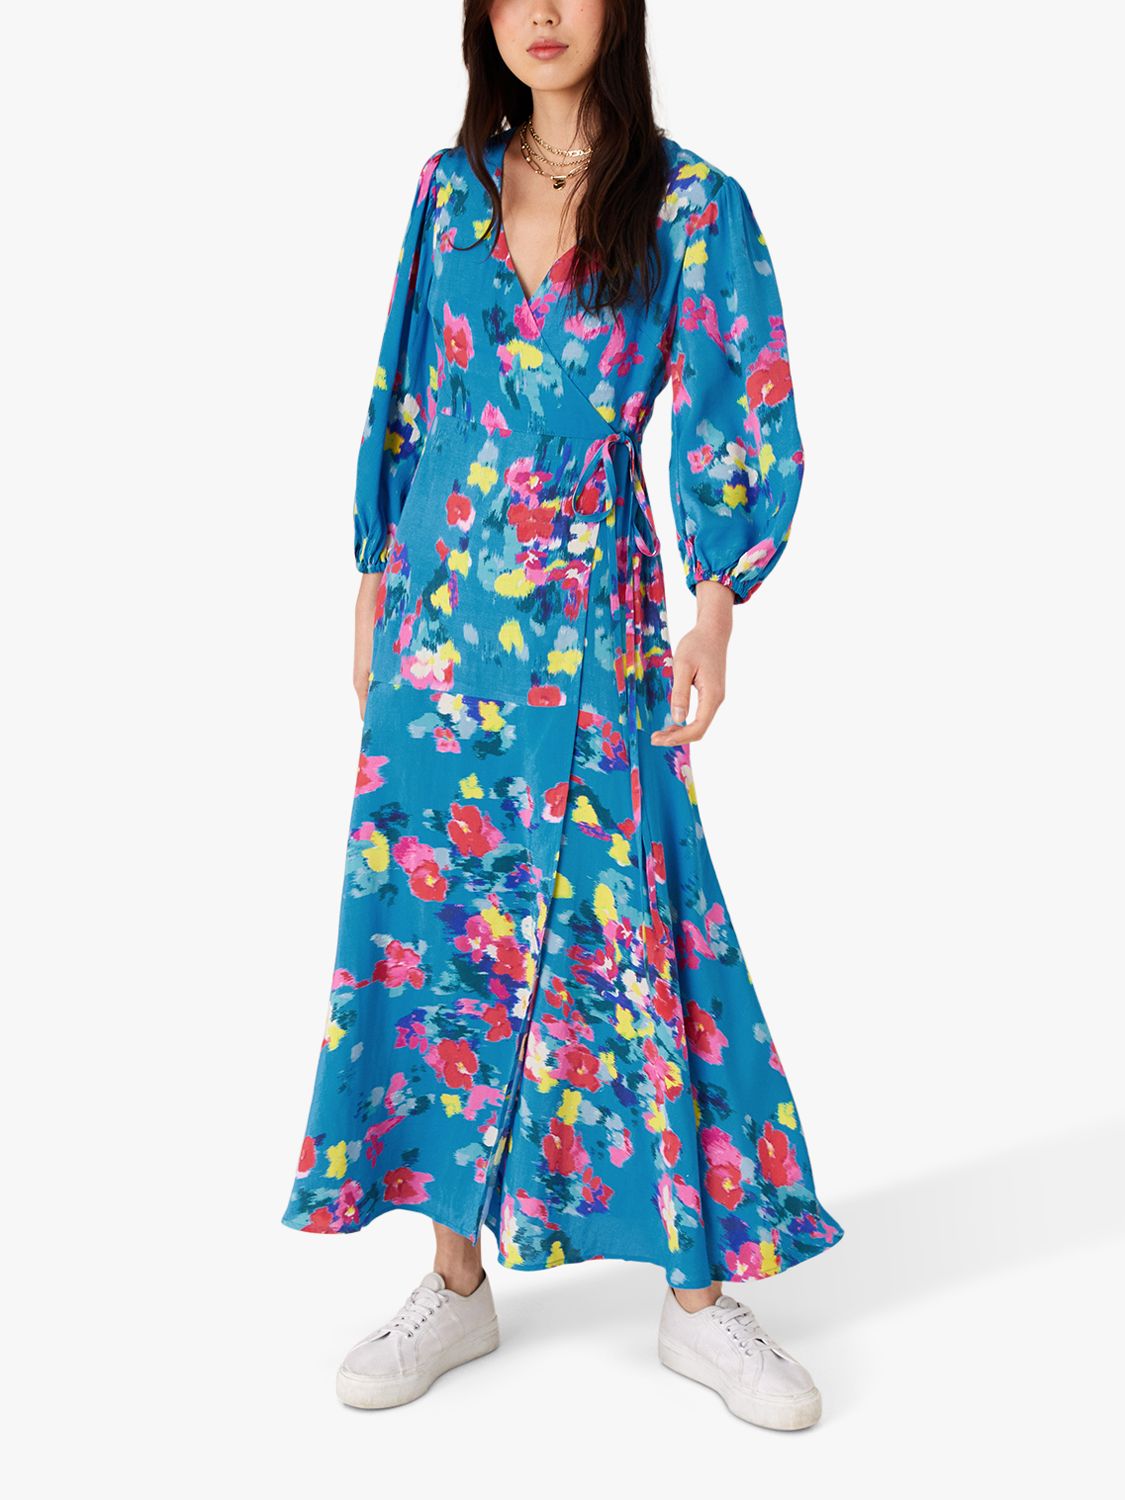 Monsoon Ellie Floral Print Wrap Dress, Turquoise at John Lewis & Partners